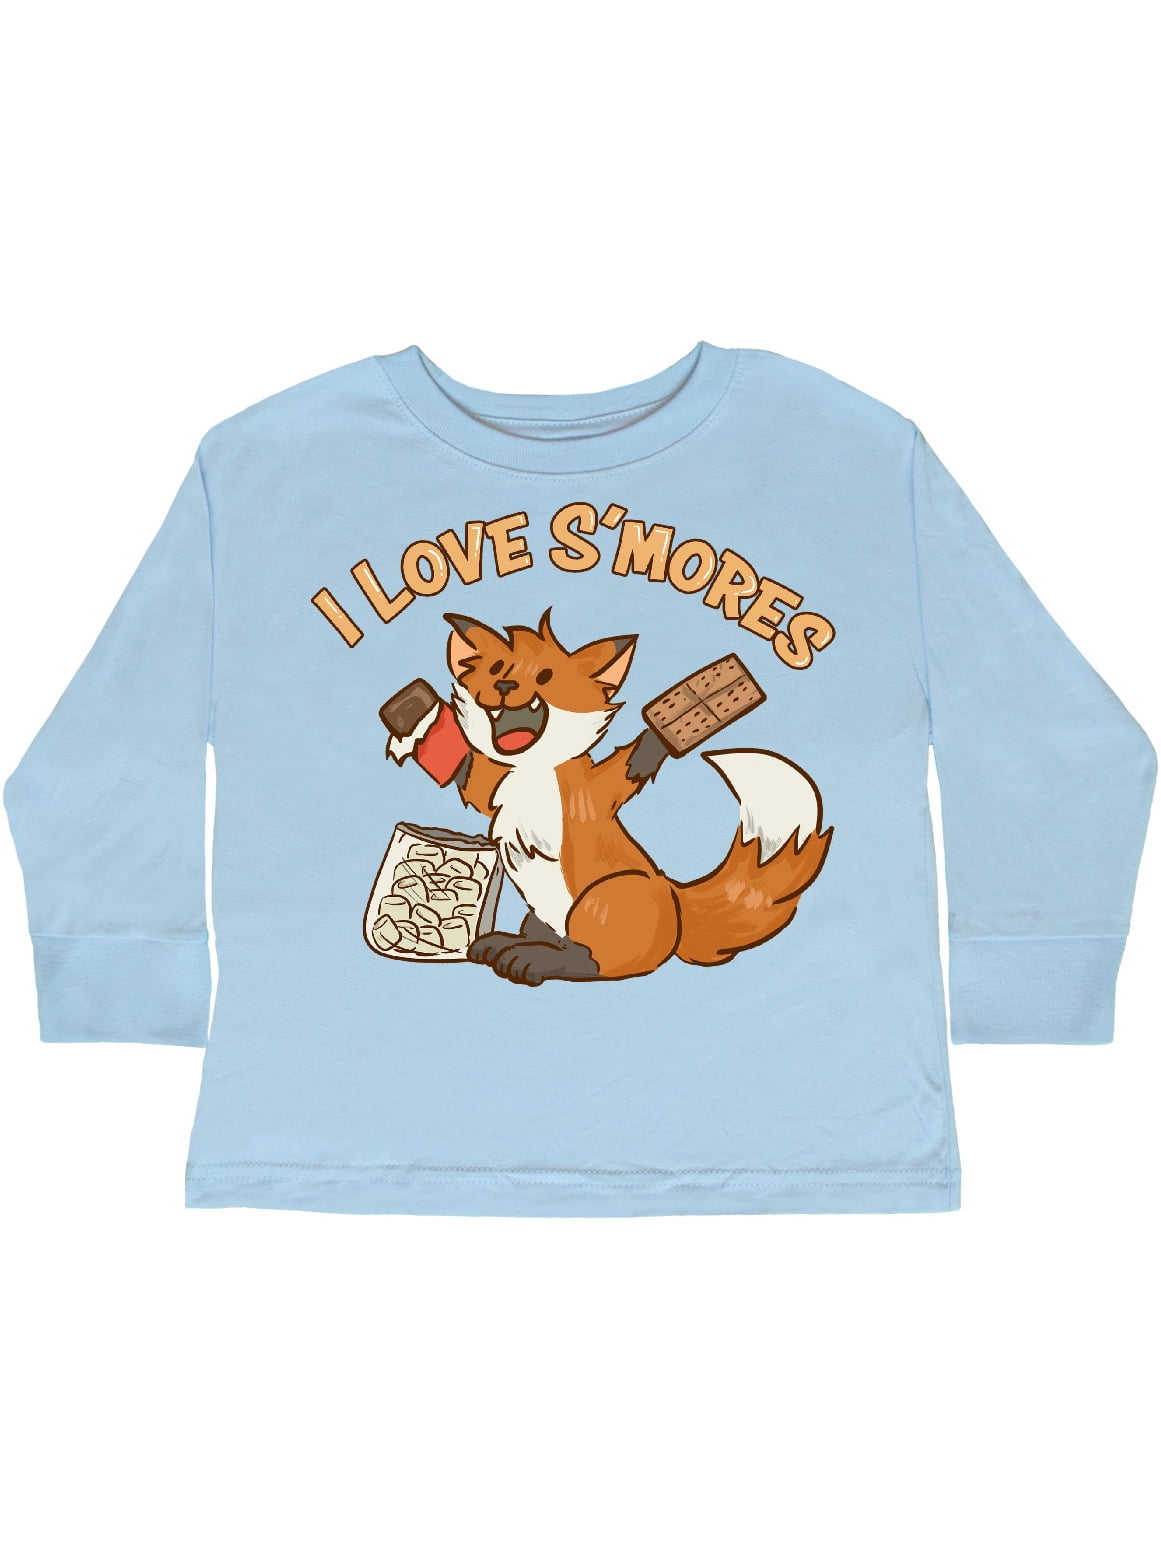 My Patronus Is a Fox Halloween Christmas Unisex Jersey Shirt